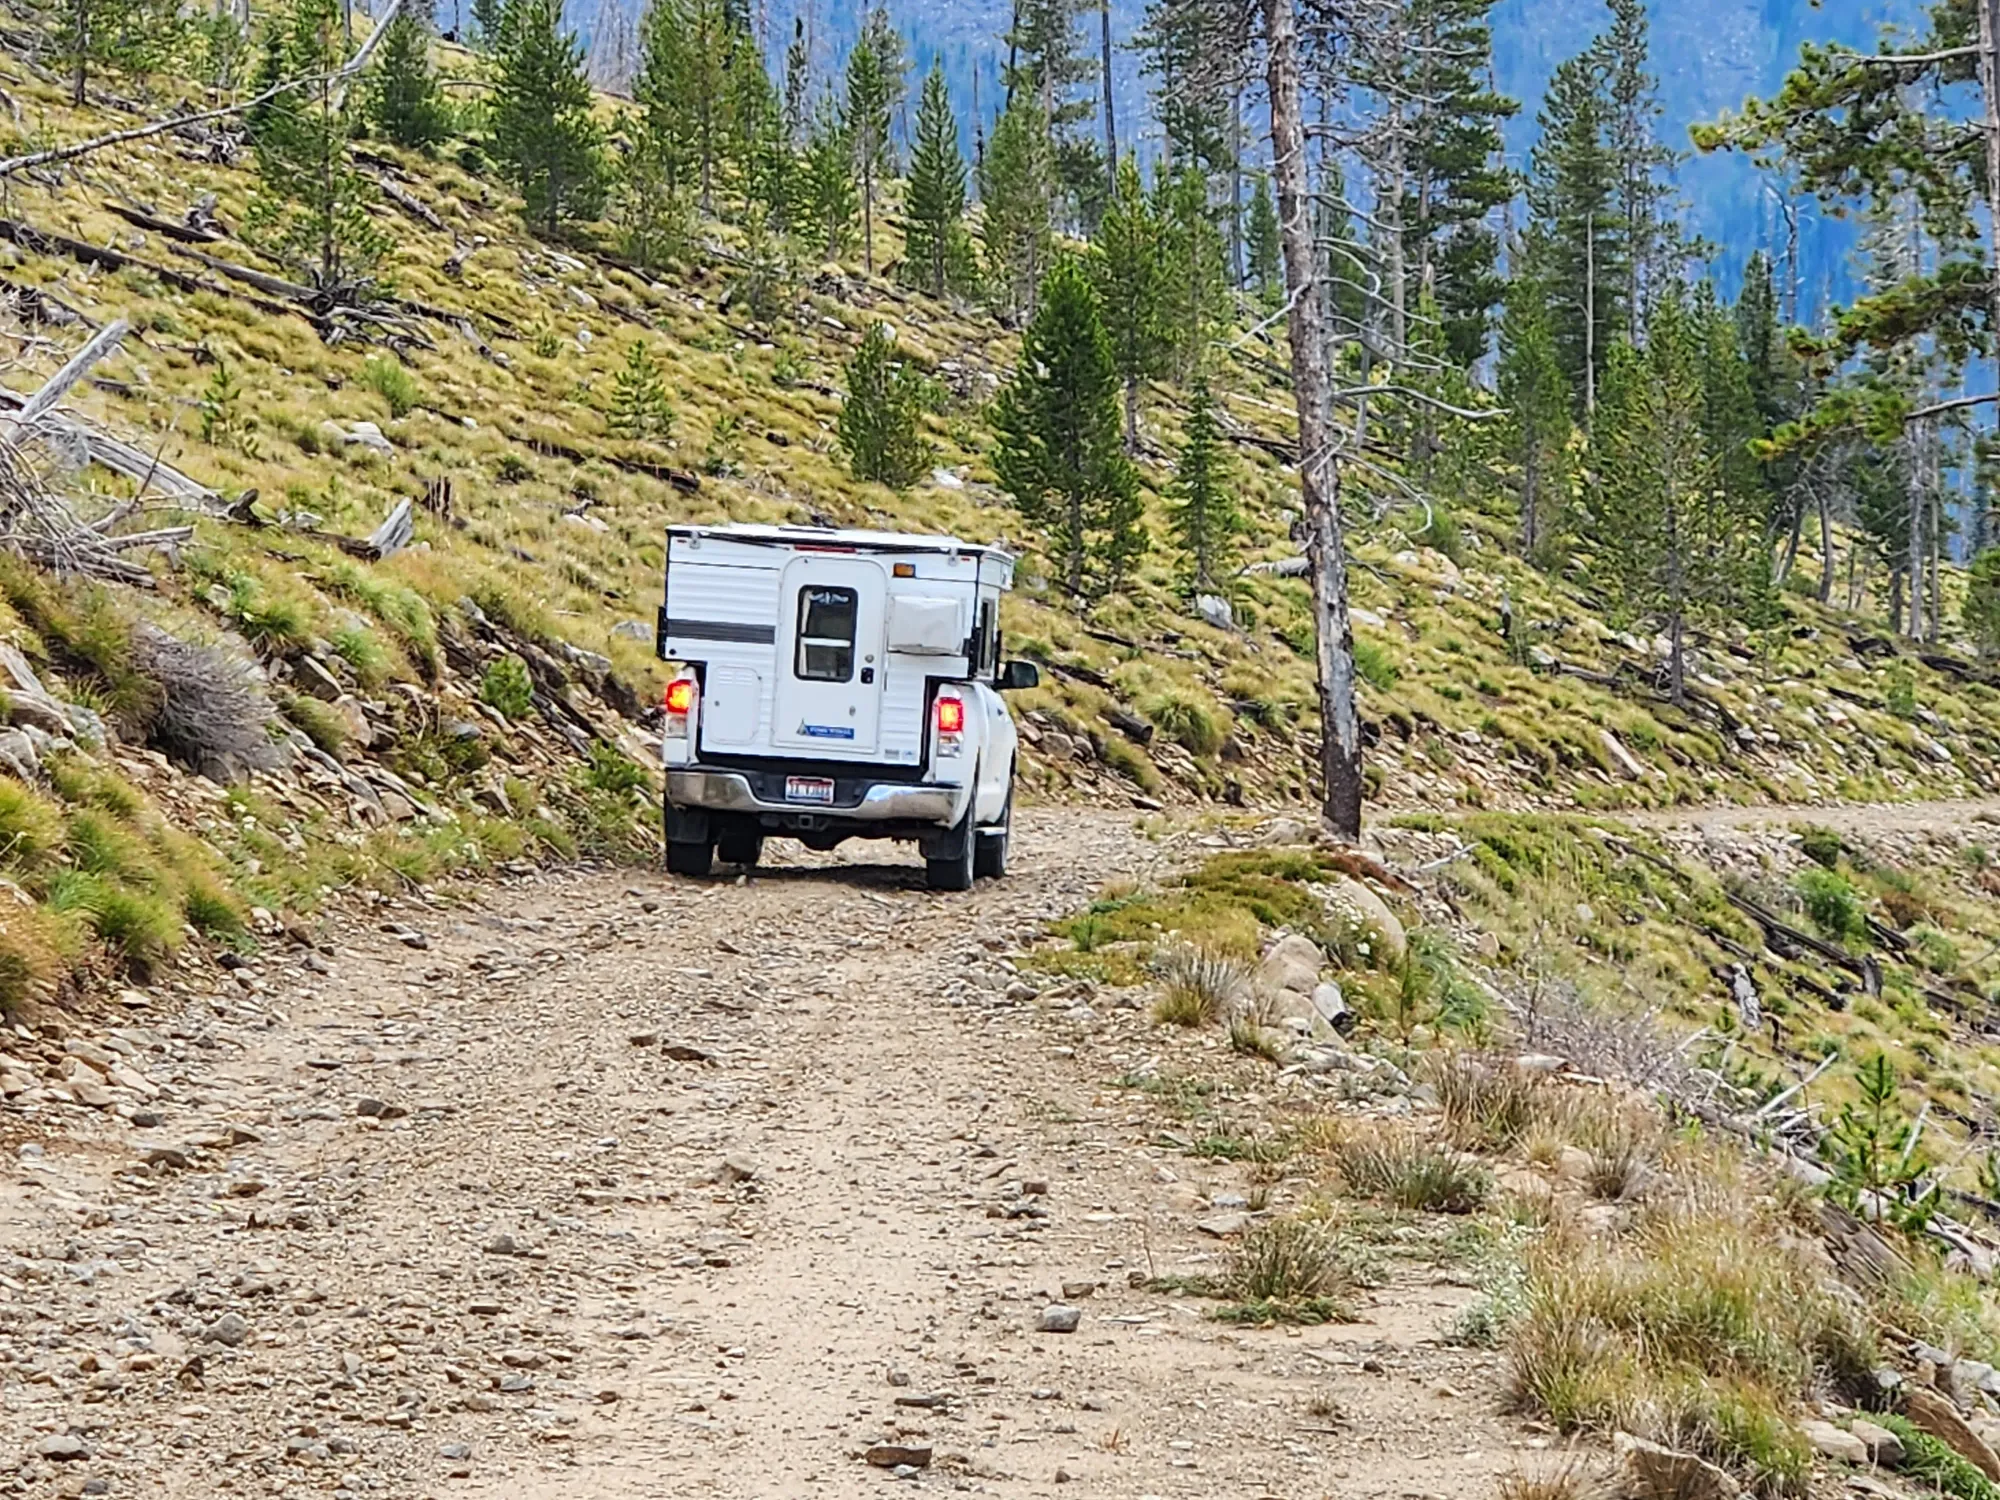 Camping, Exploring, and Traversing the Magruder Trail